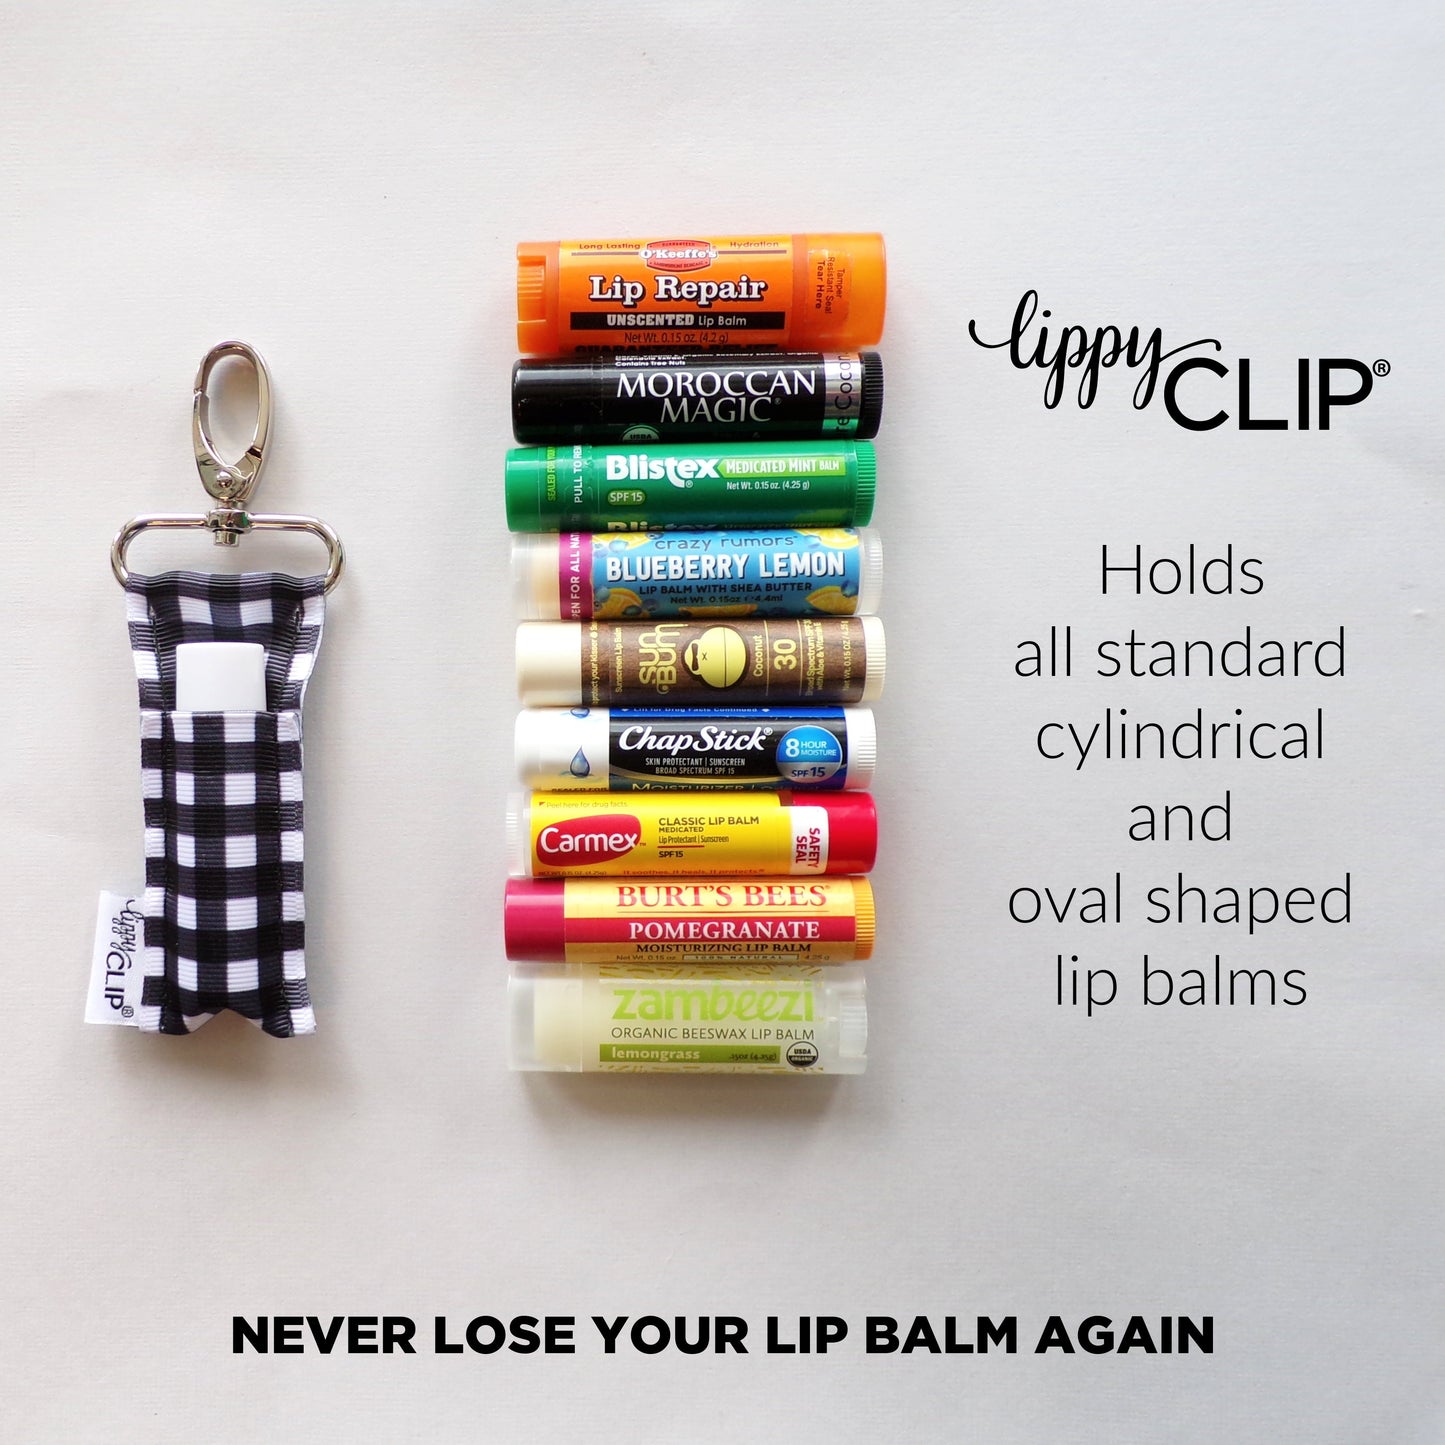 Golf LippyClip® - Discount Already Applied